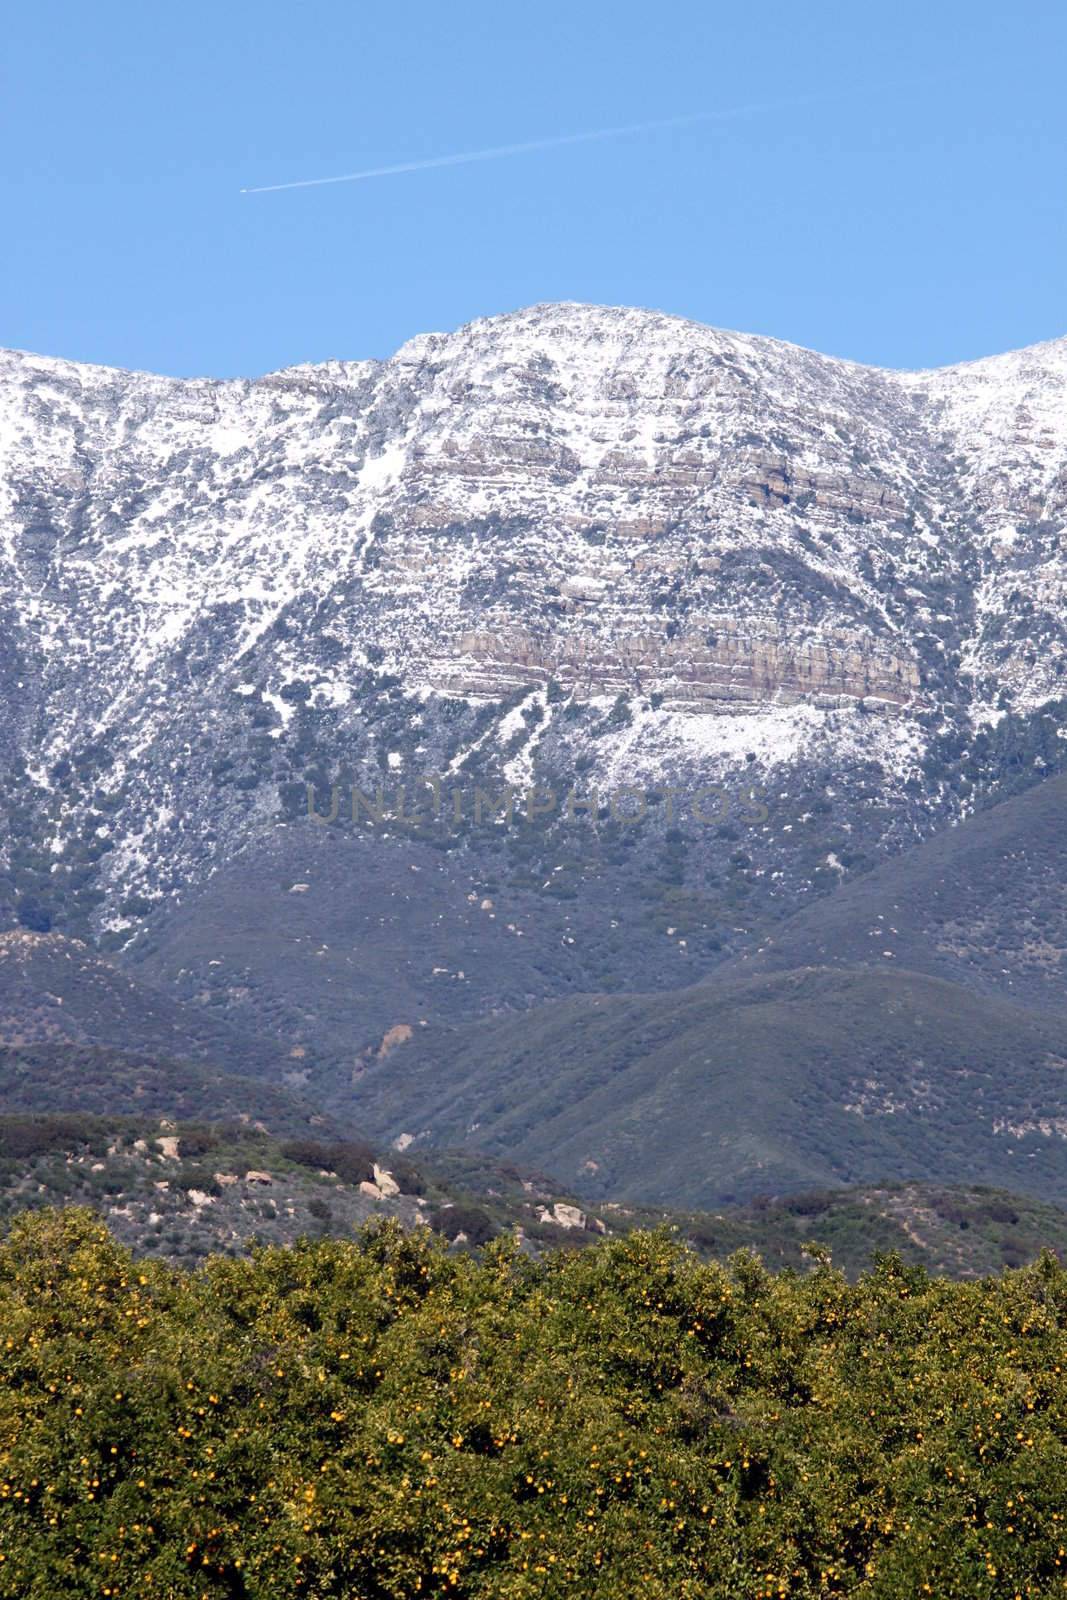 Topa Topa mountains with snow near Ojai, California